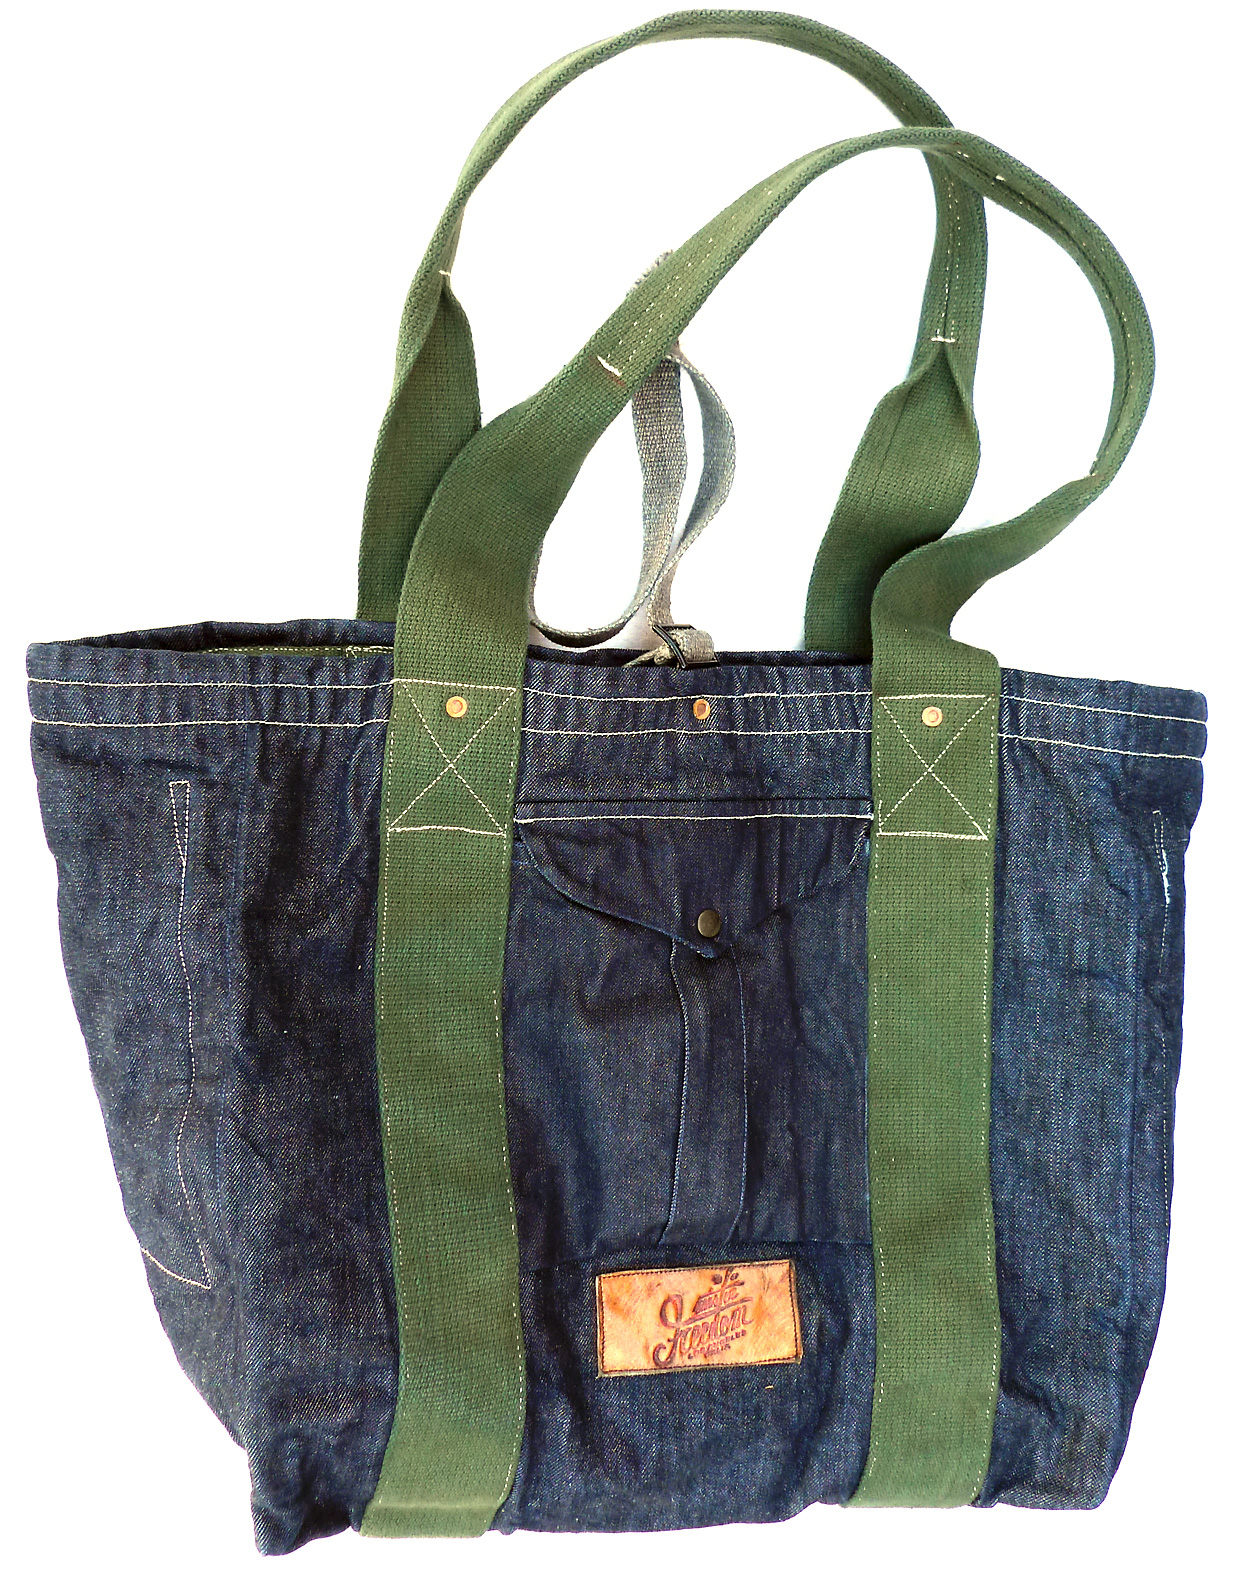 MF® Tripper bag (front)